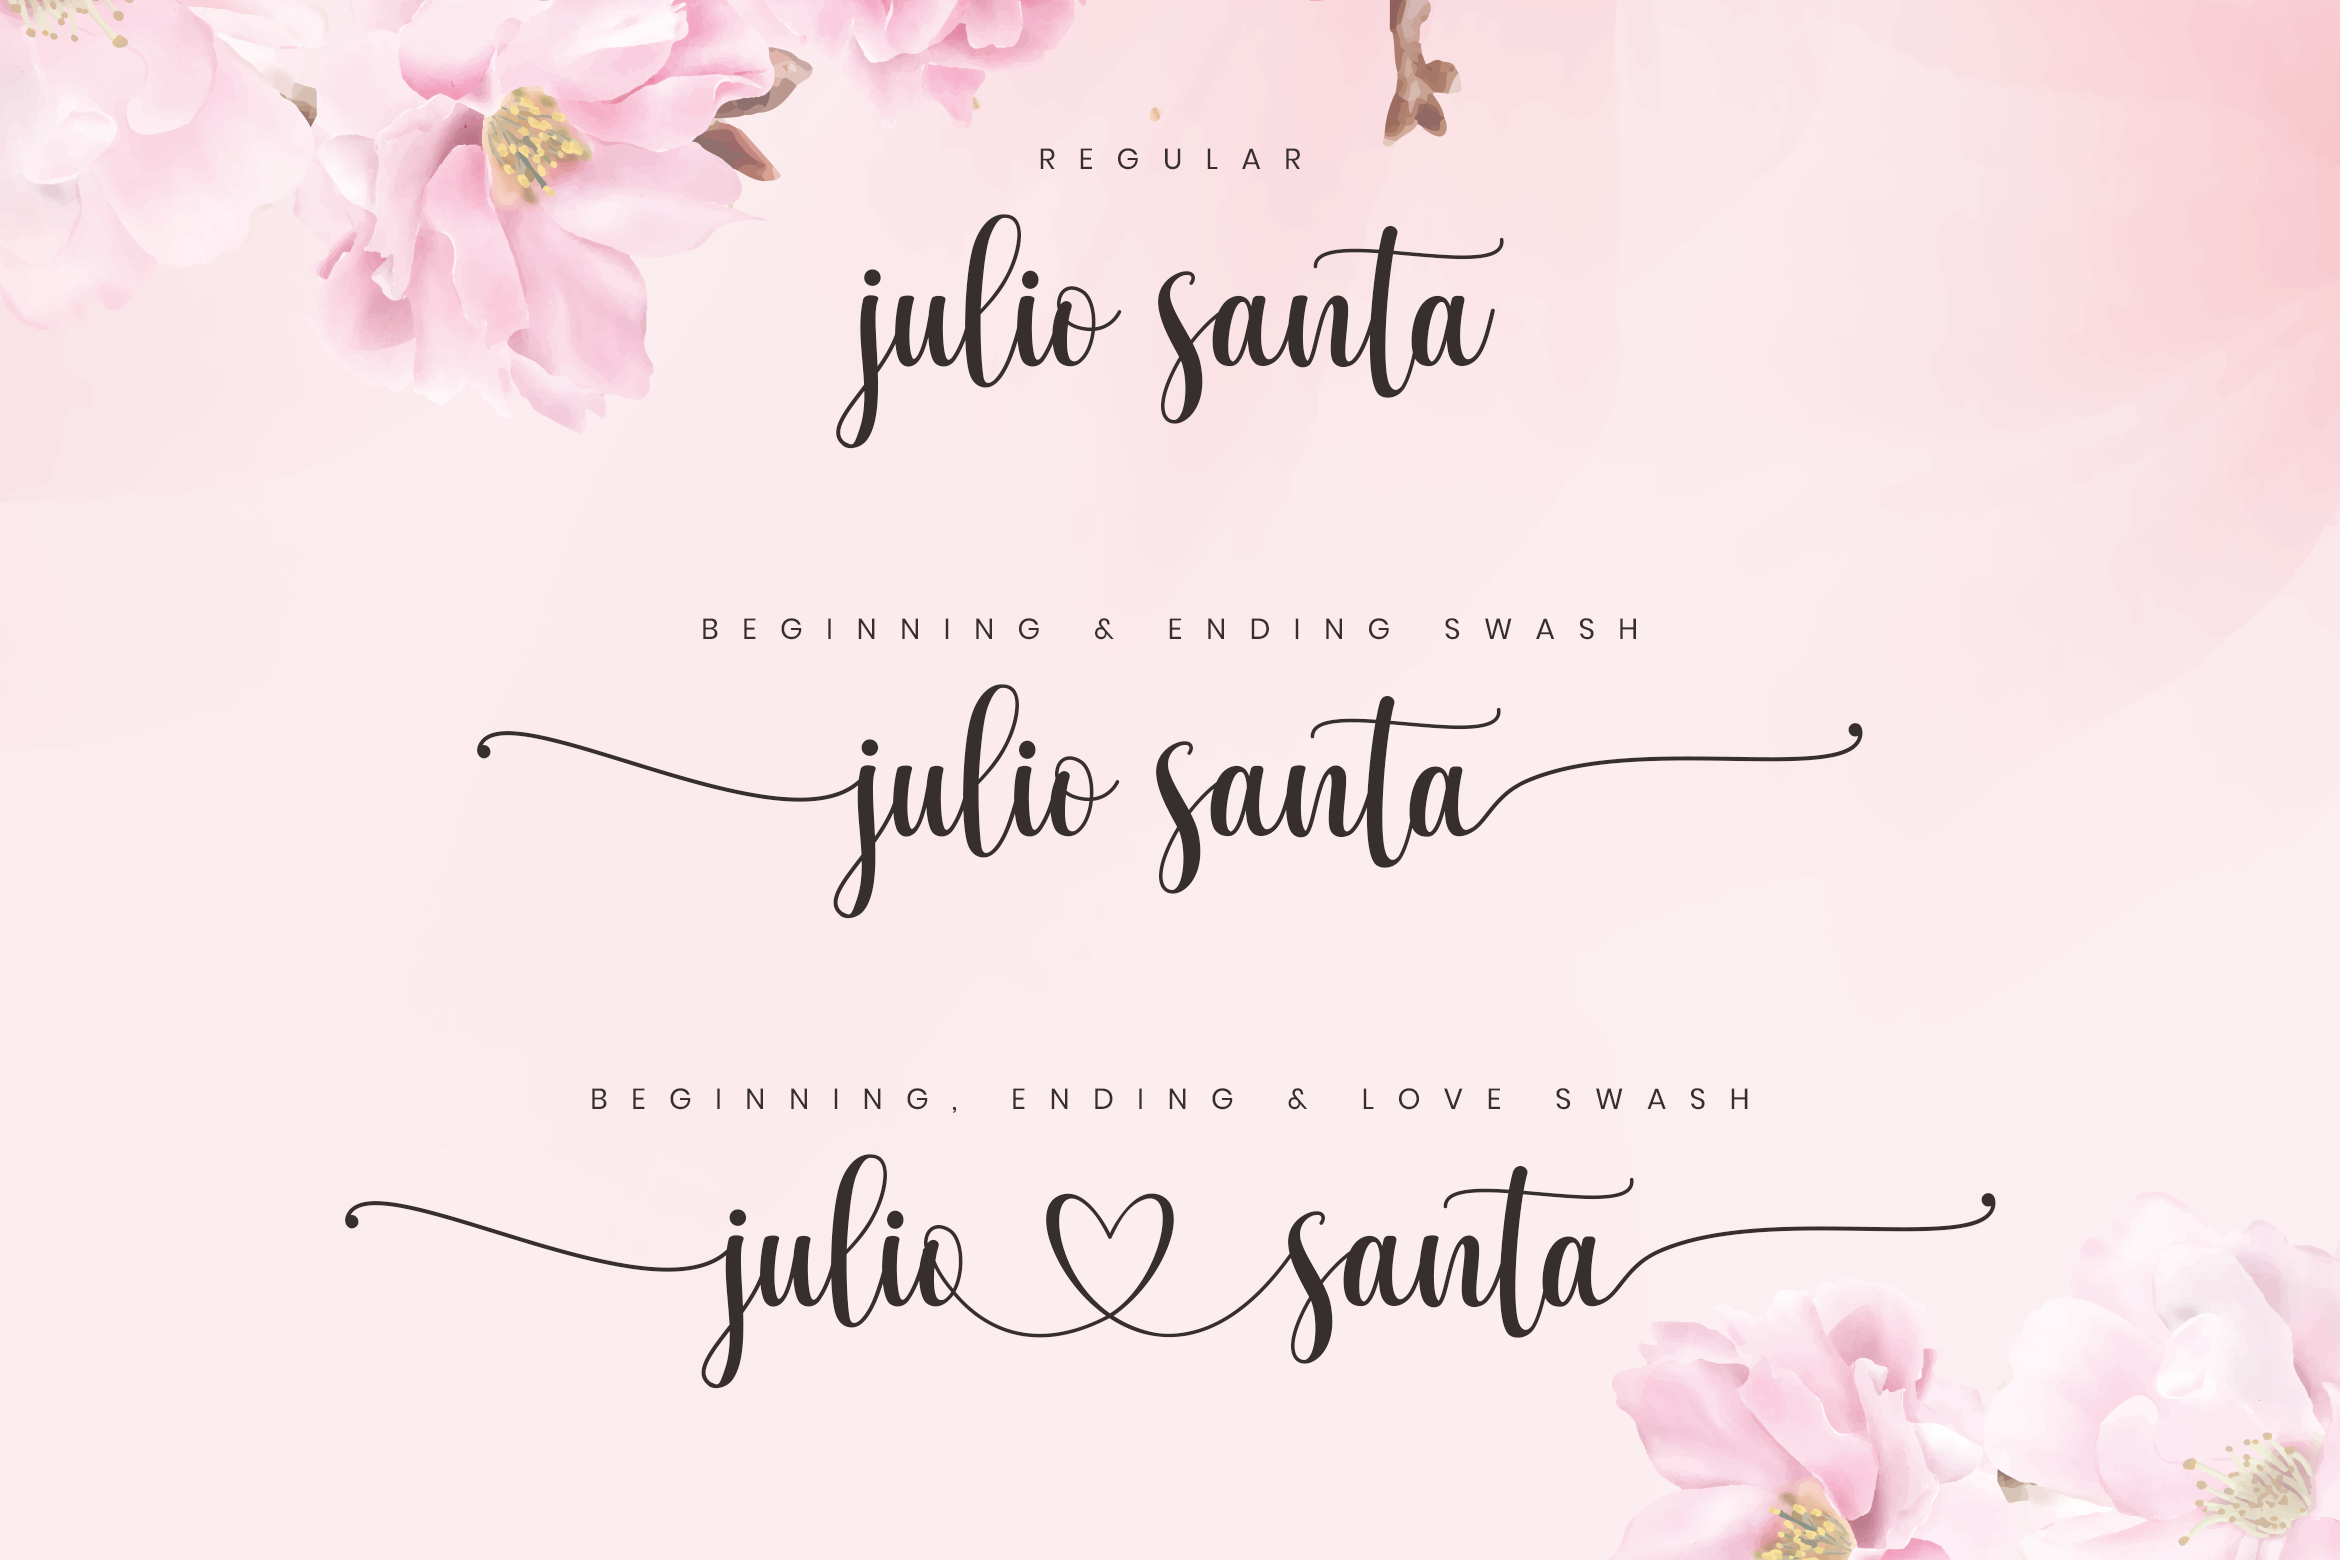 Julio Santa